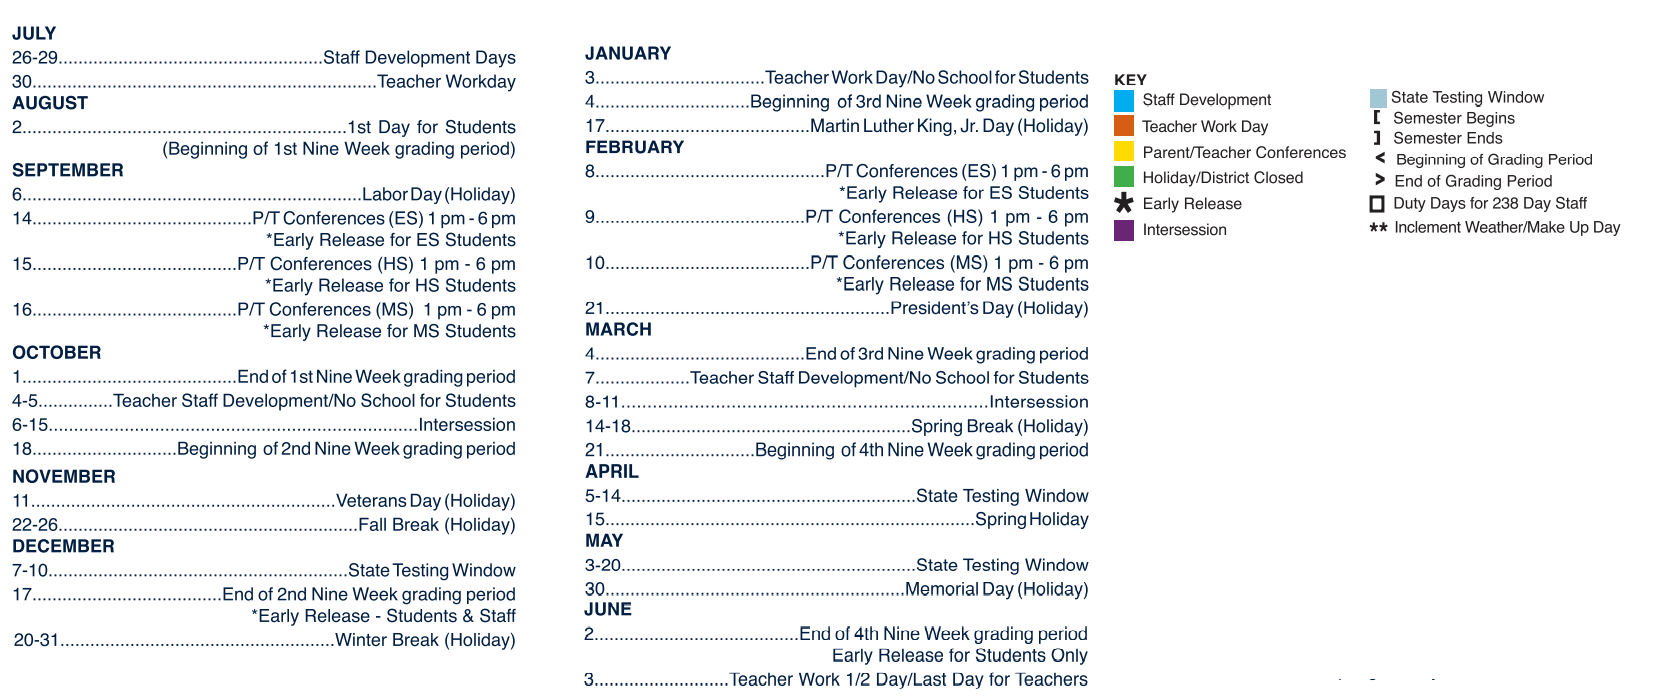 District School Academic Calendar Key for Dowell Elementary